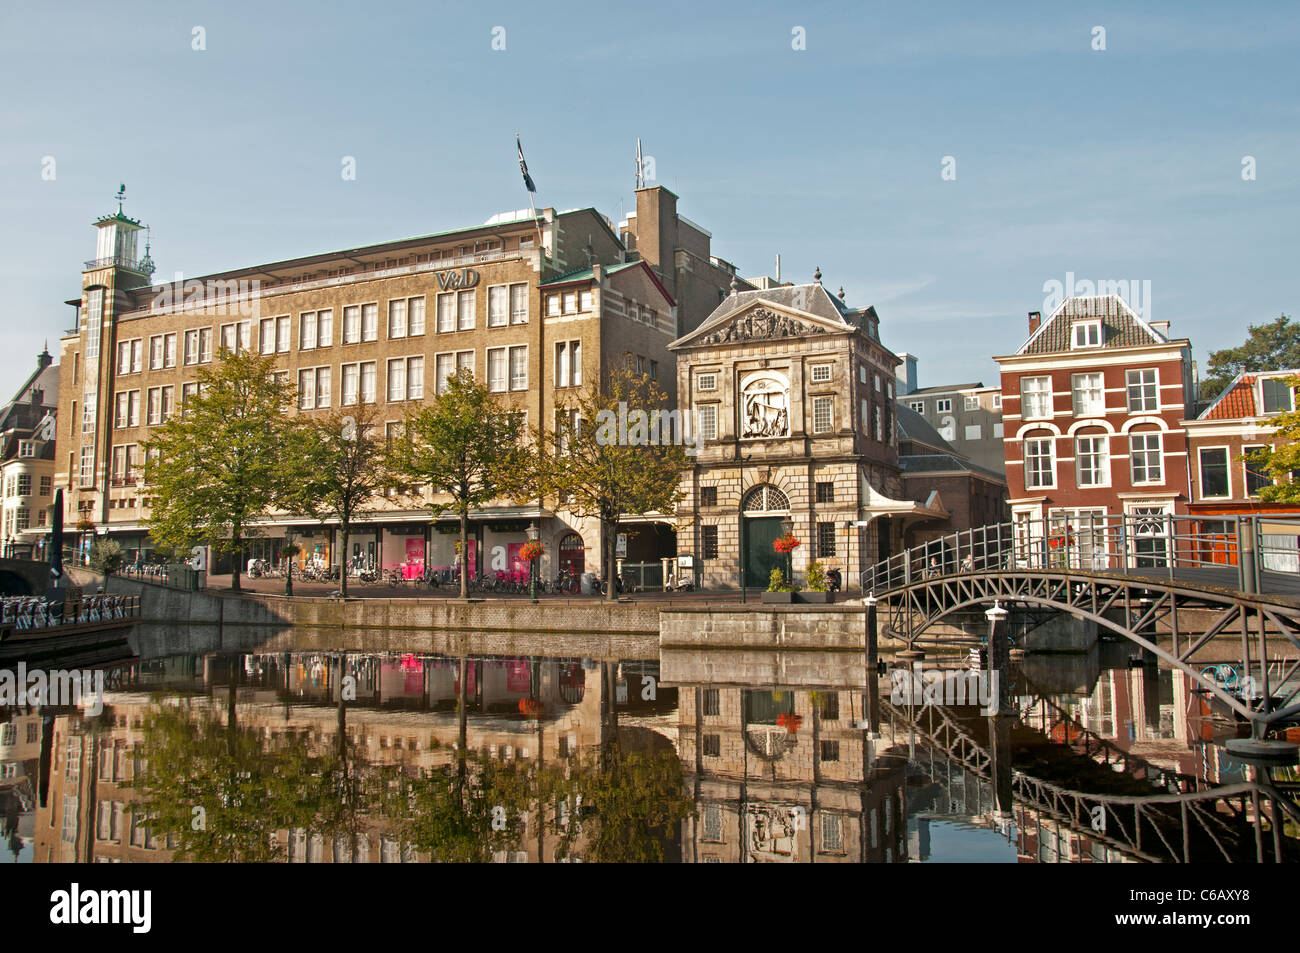 Leiden Nieuwe Rijn Netherlands balance weighing-house V & D Stock Photo